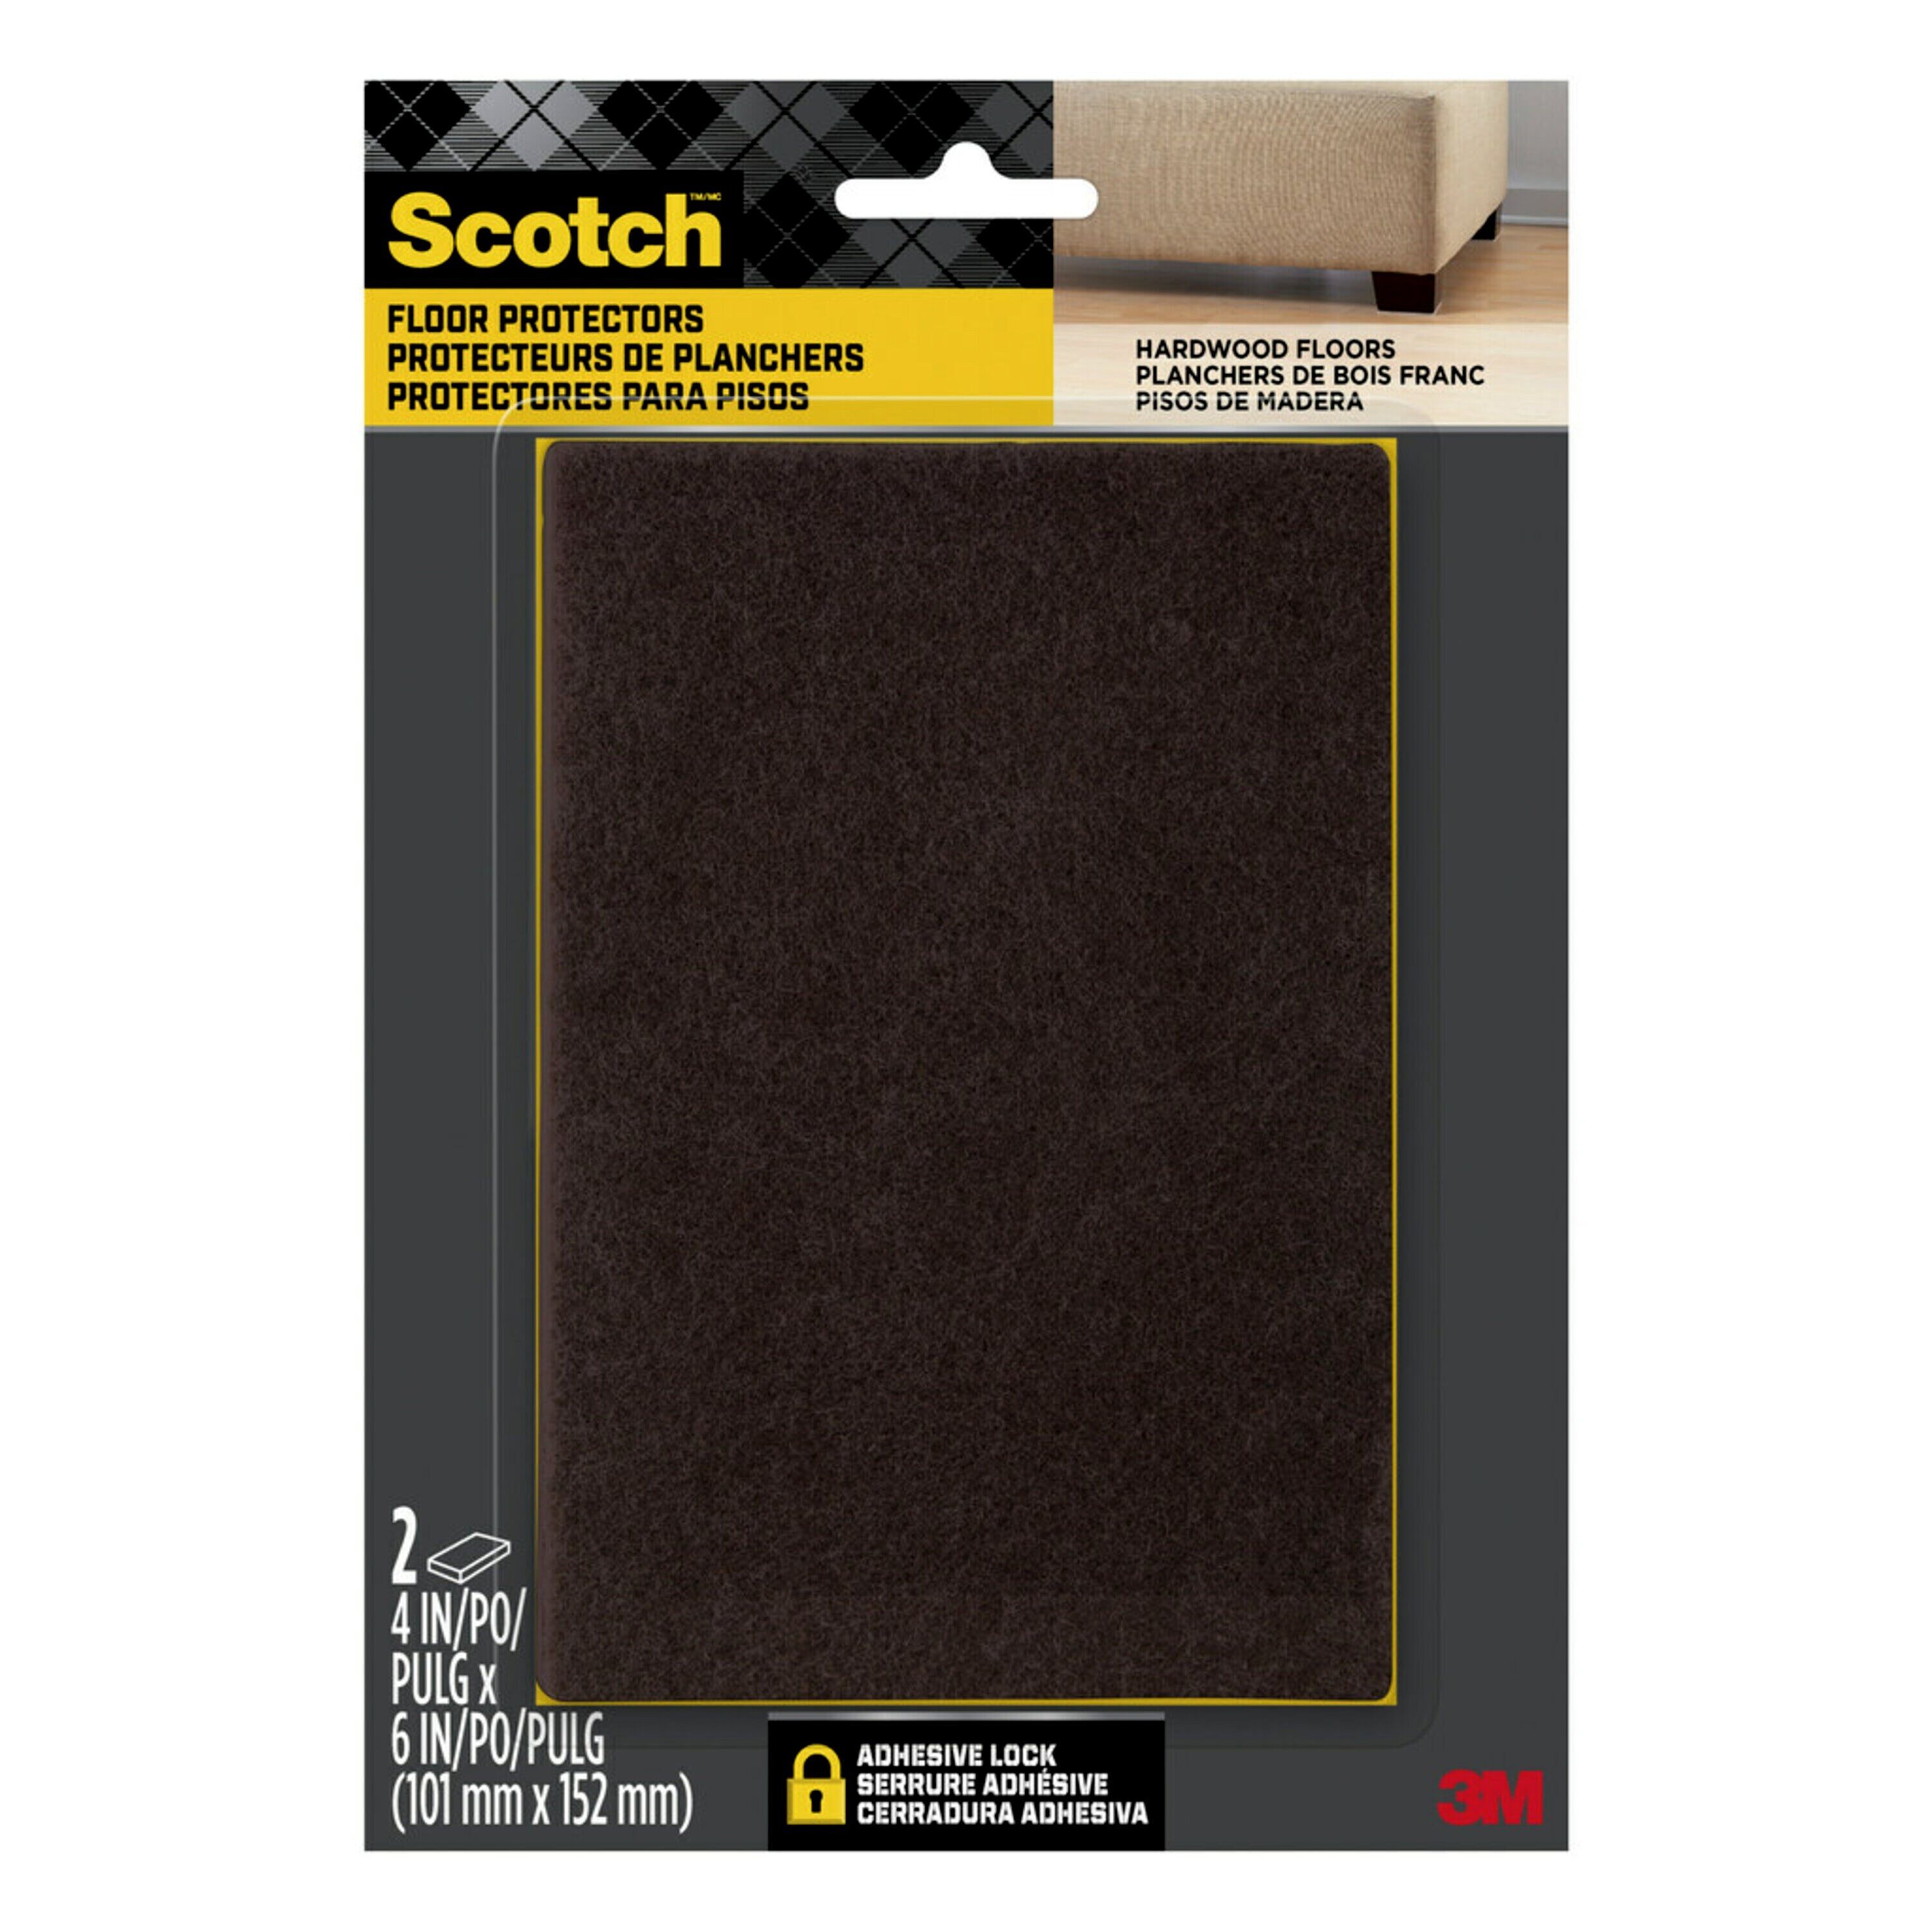 Scotch 16-Pack 3/4-in Brown Round Felt Furniture Pads in the Felt